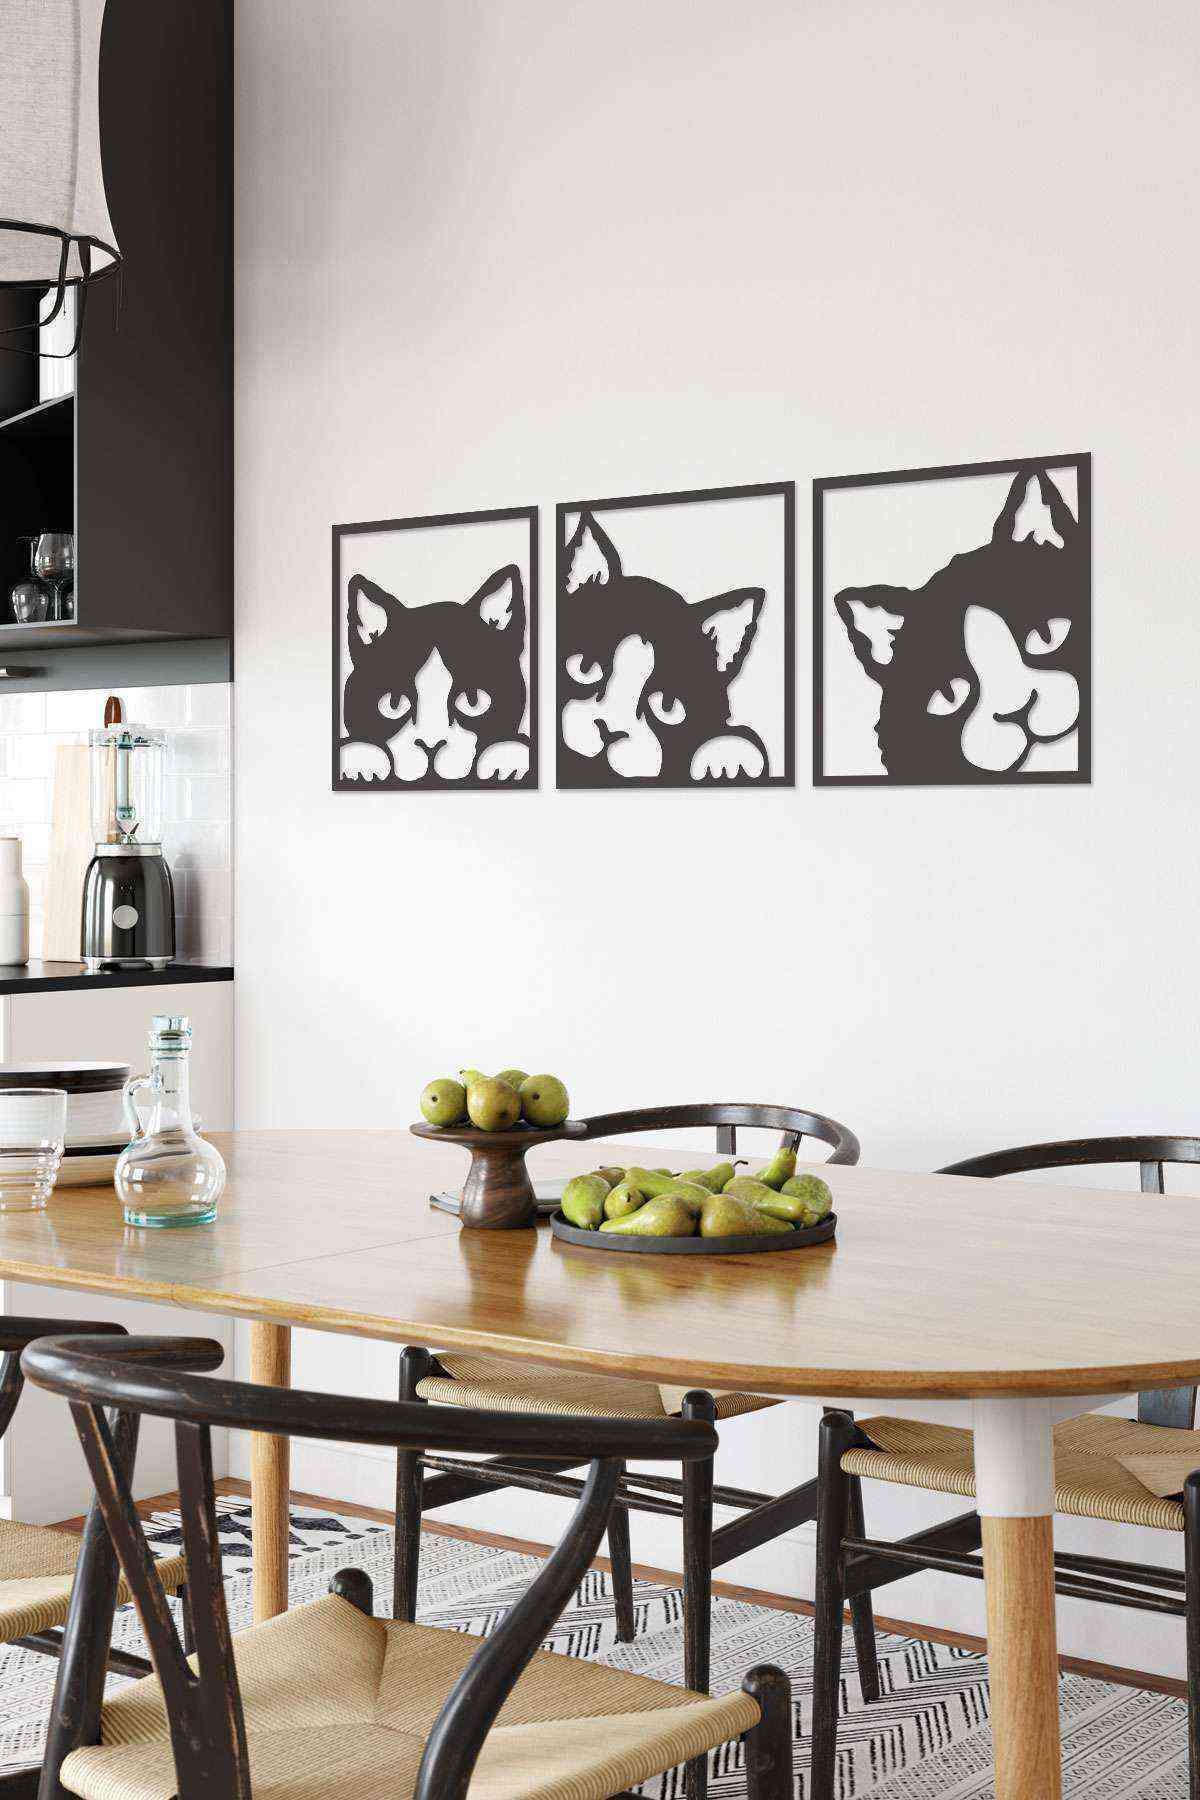 RetroLazer Kedi Cats Figürlü 3d Mdf Tablo Evinize Ofisinize Yeni Tarz Wall